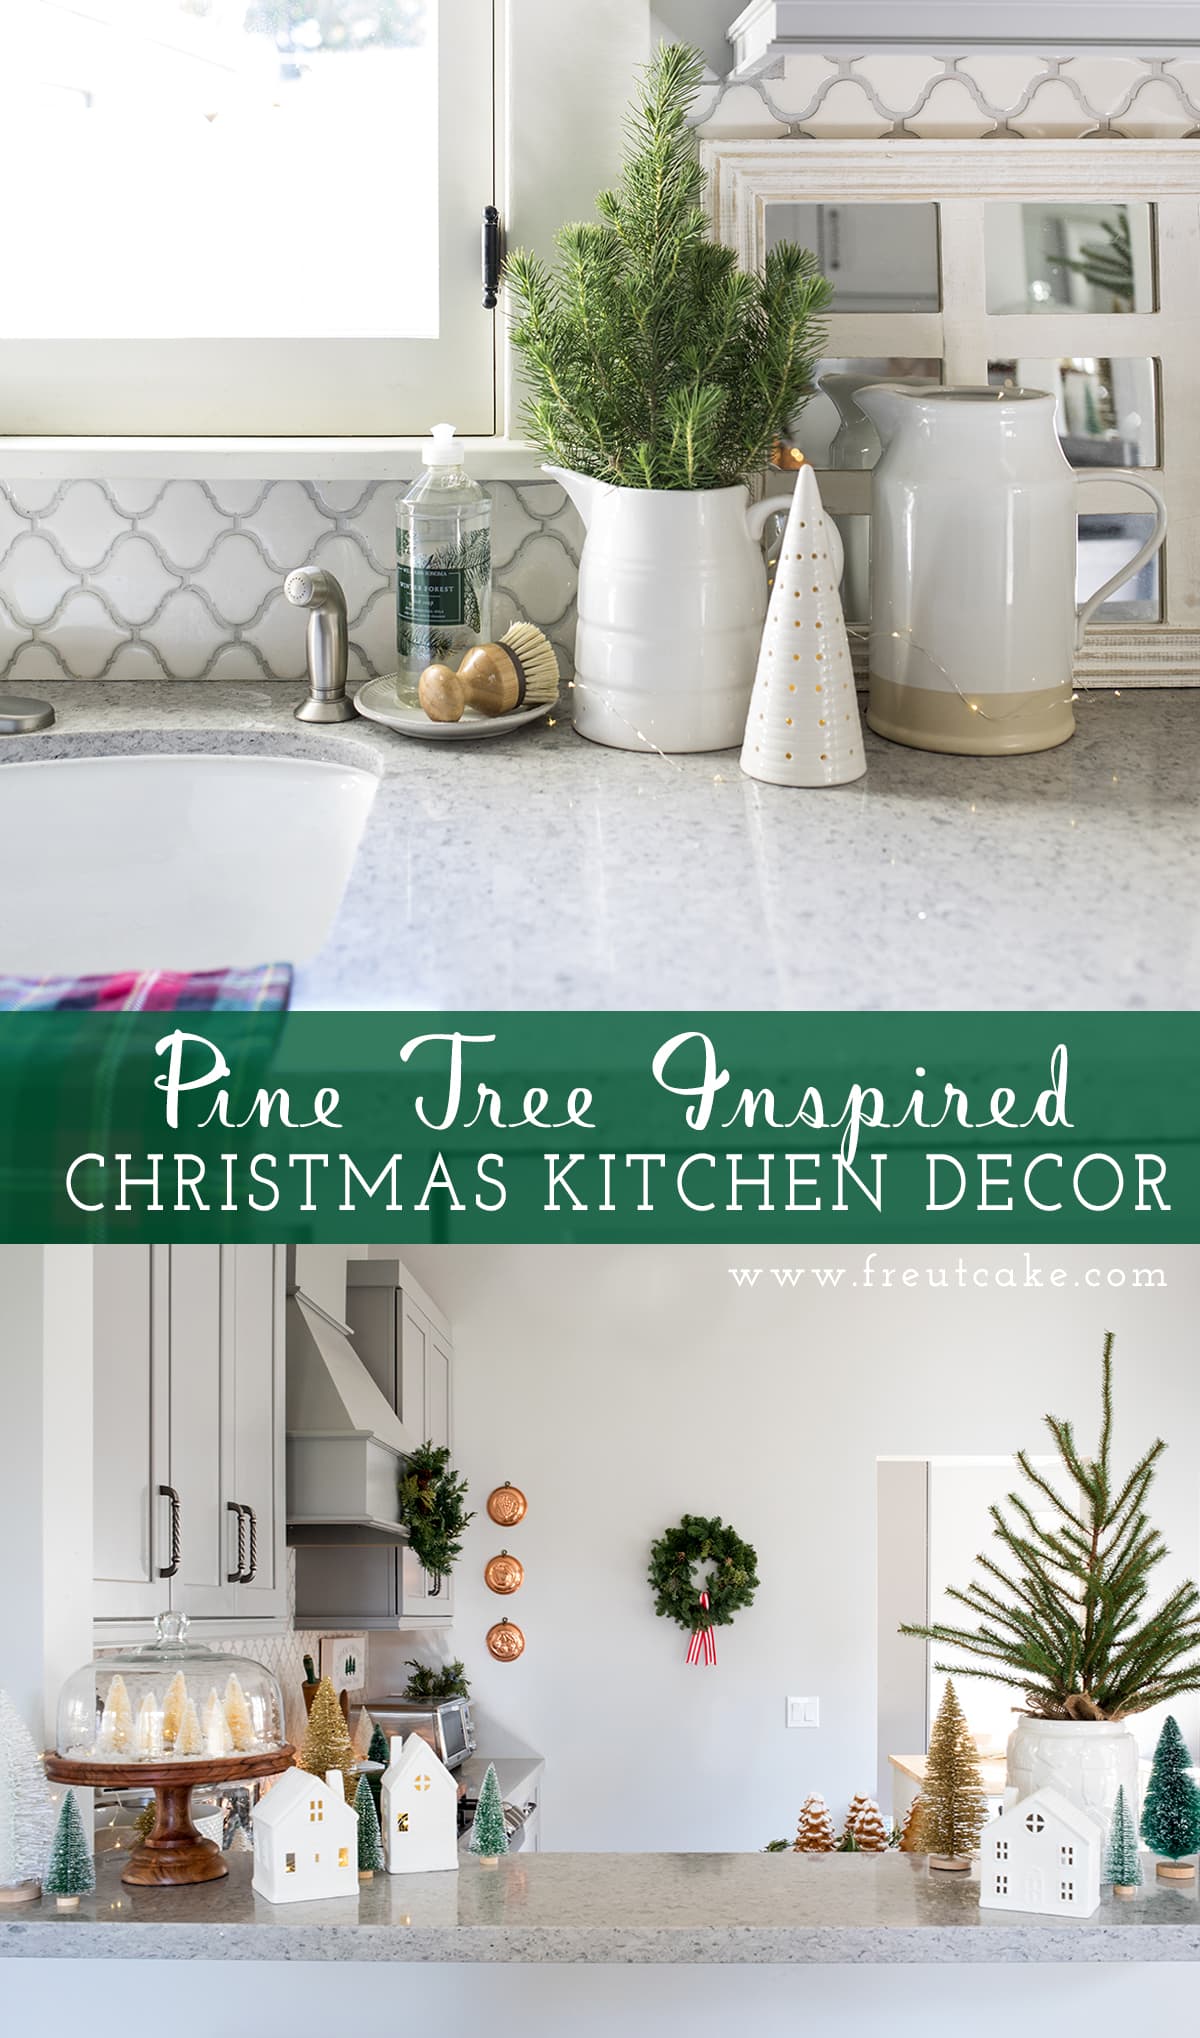 https://www.freutcake.com/wp-content/uploads/2019/11/Pine-Tree-Inspired-Christmas-Kitchen-Decor-PIN.jpg